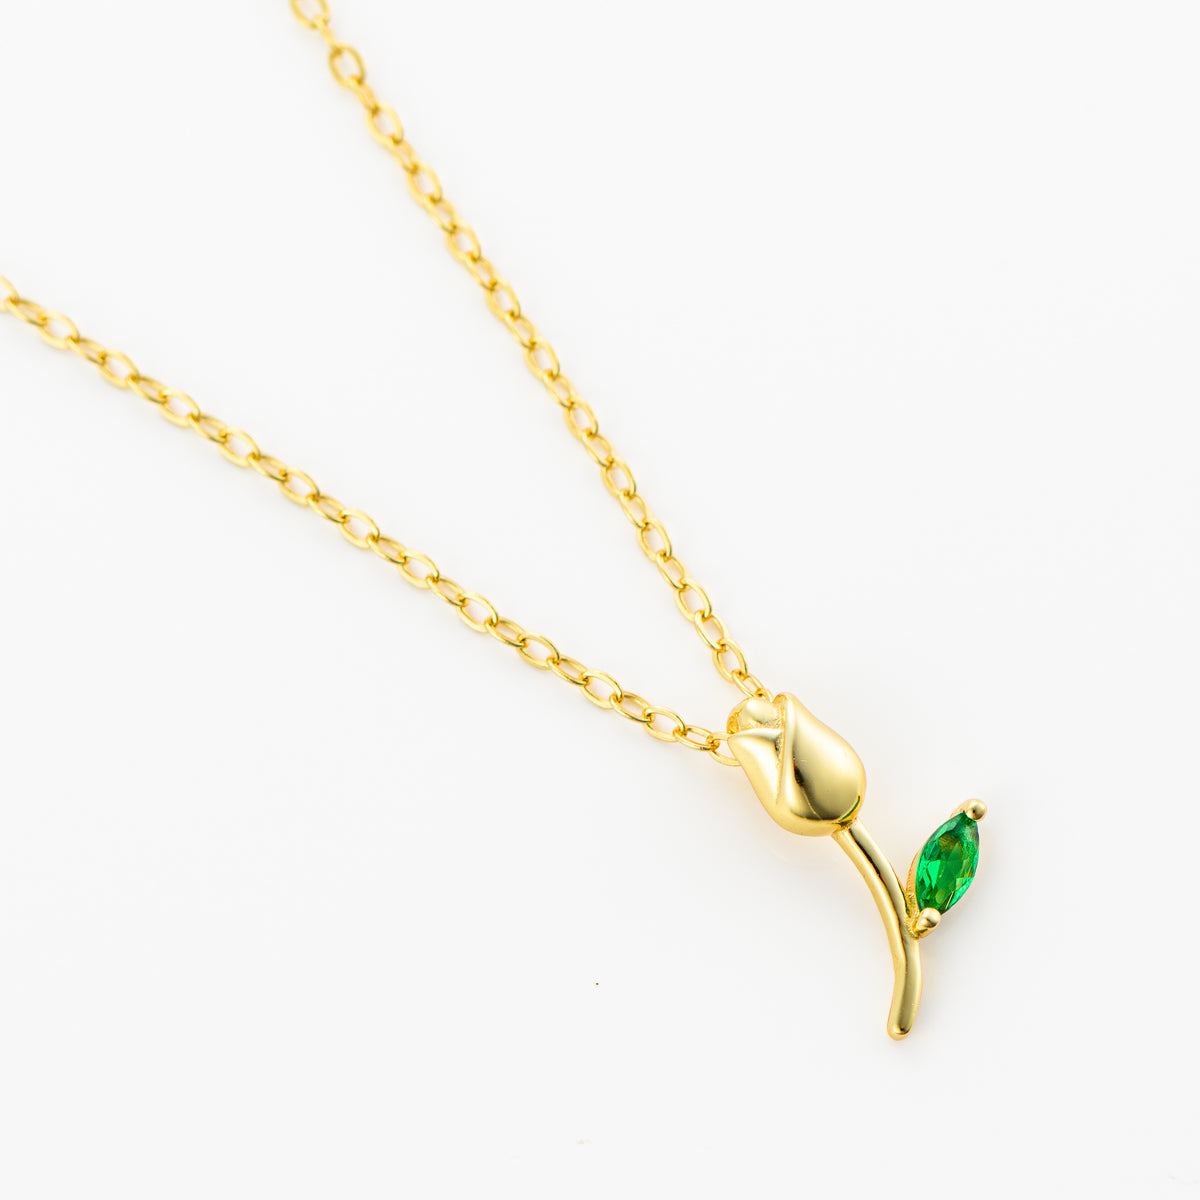 Petite Tulipe silver pendant necklace, gold plated